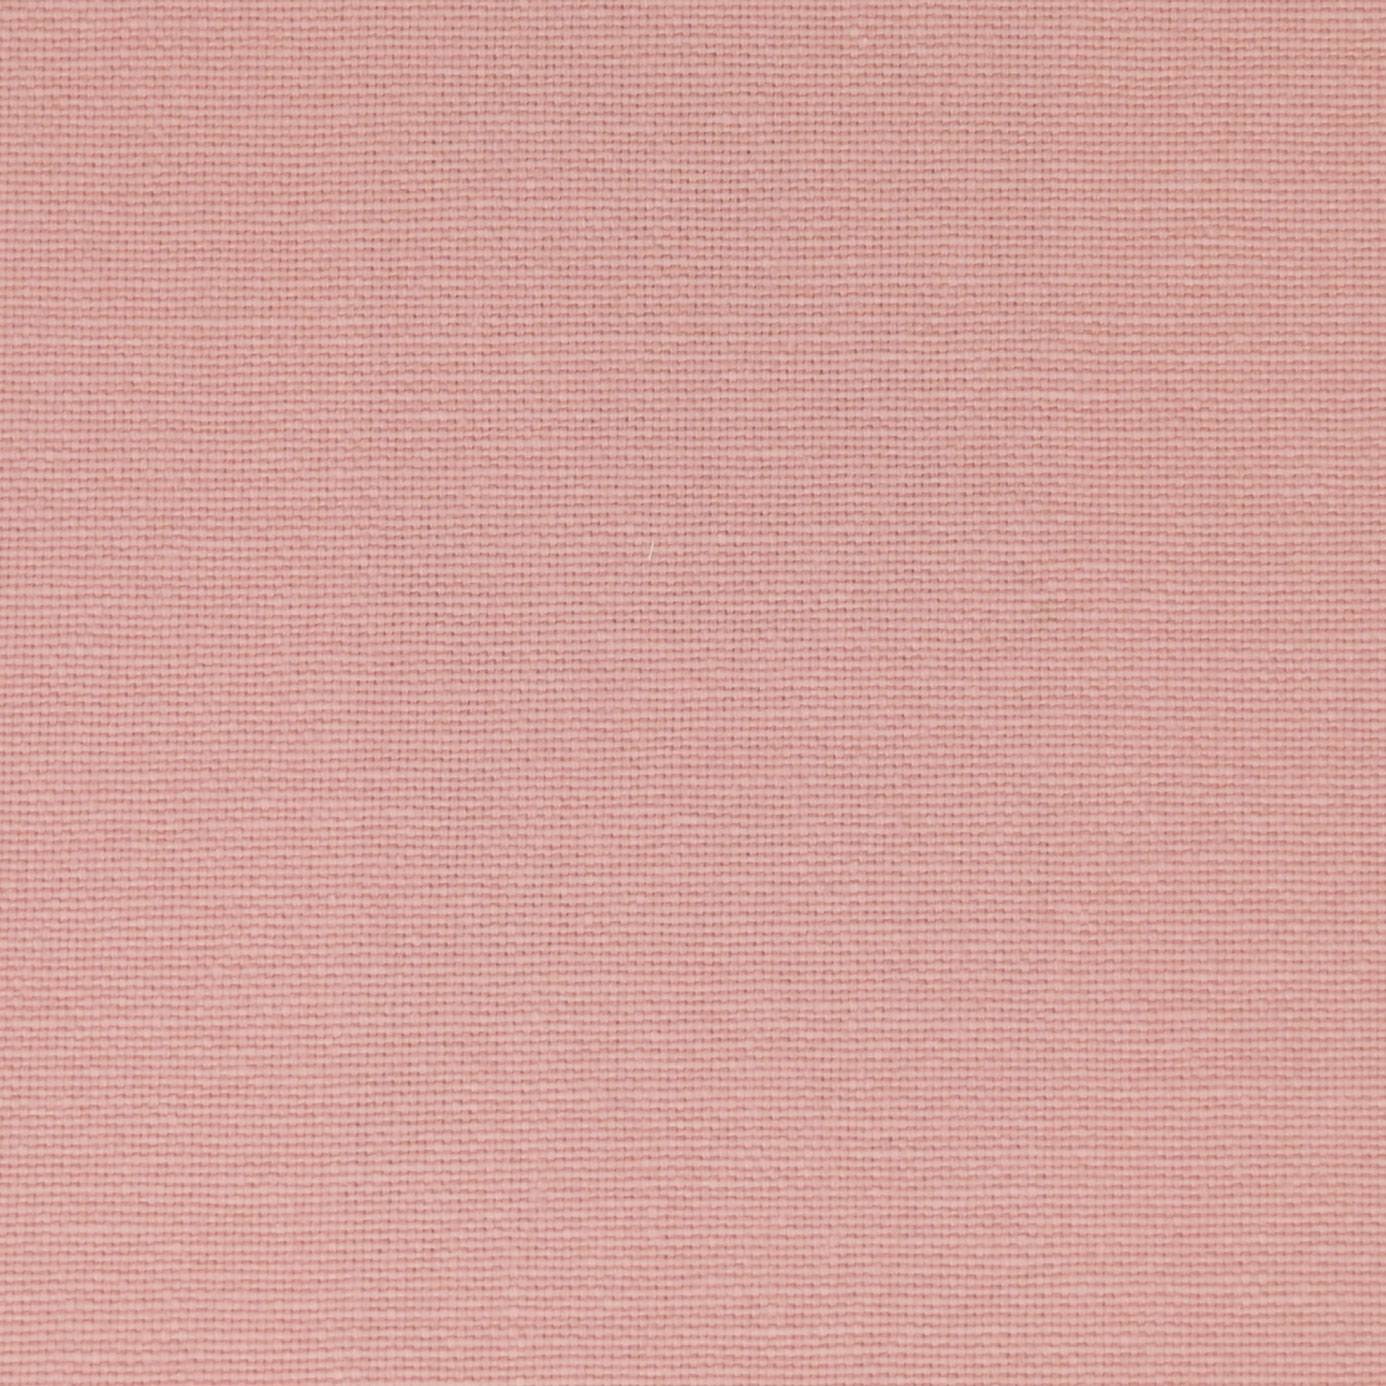 Rufflette Blossom Fabrics Cora Fabric - Dusty Rose - 3023891